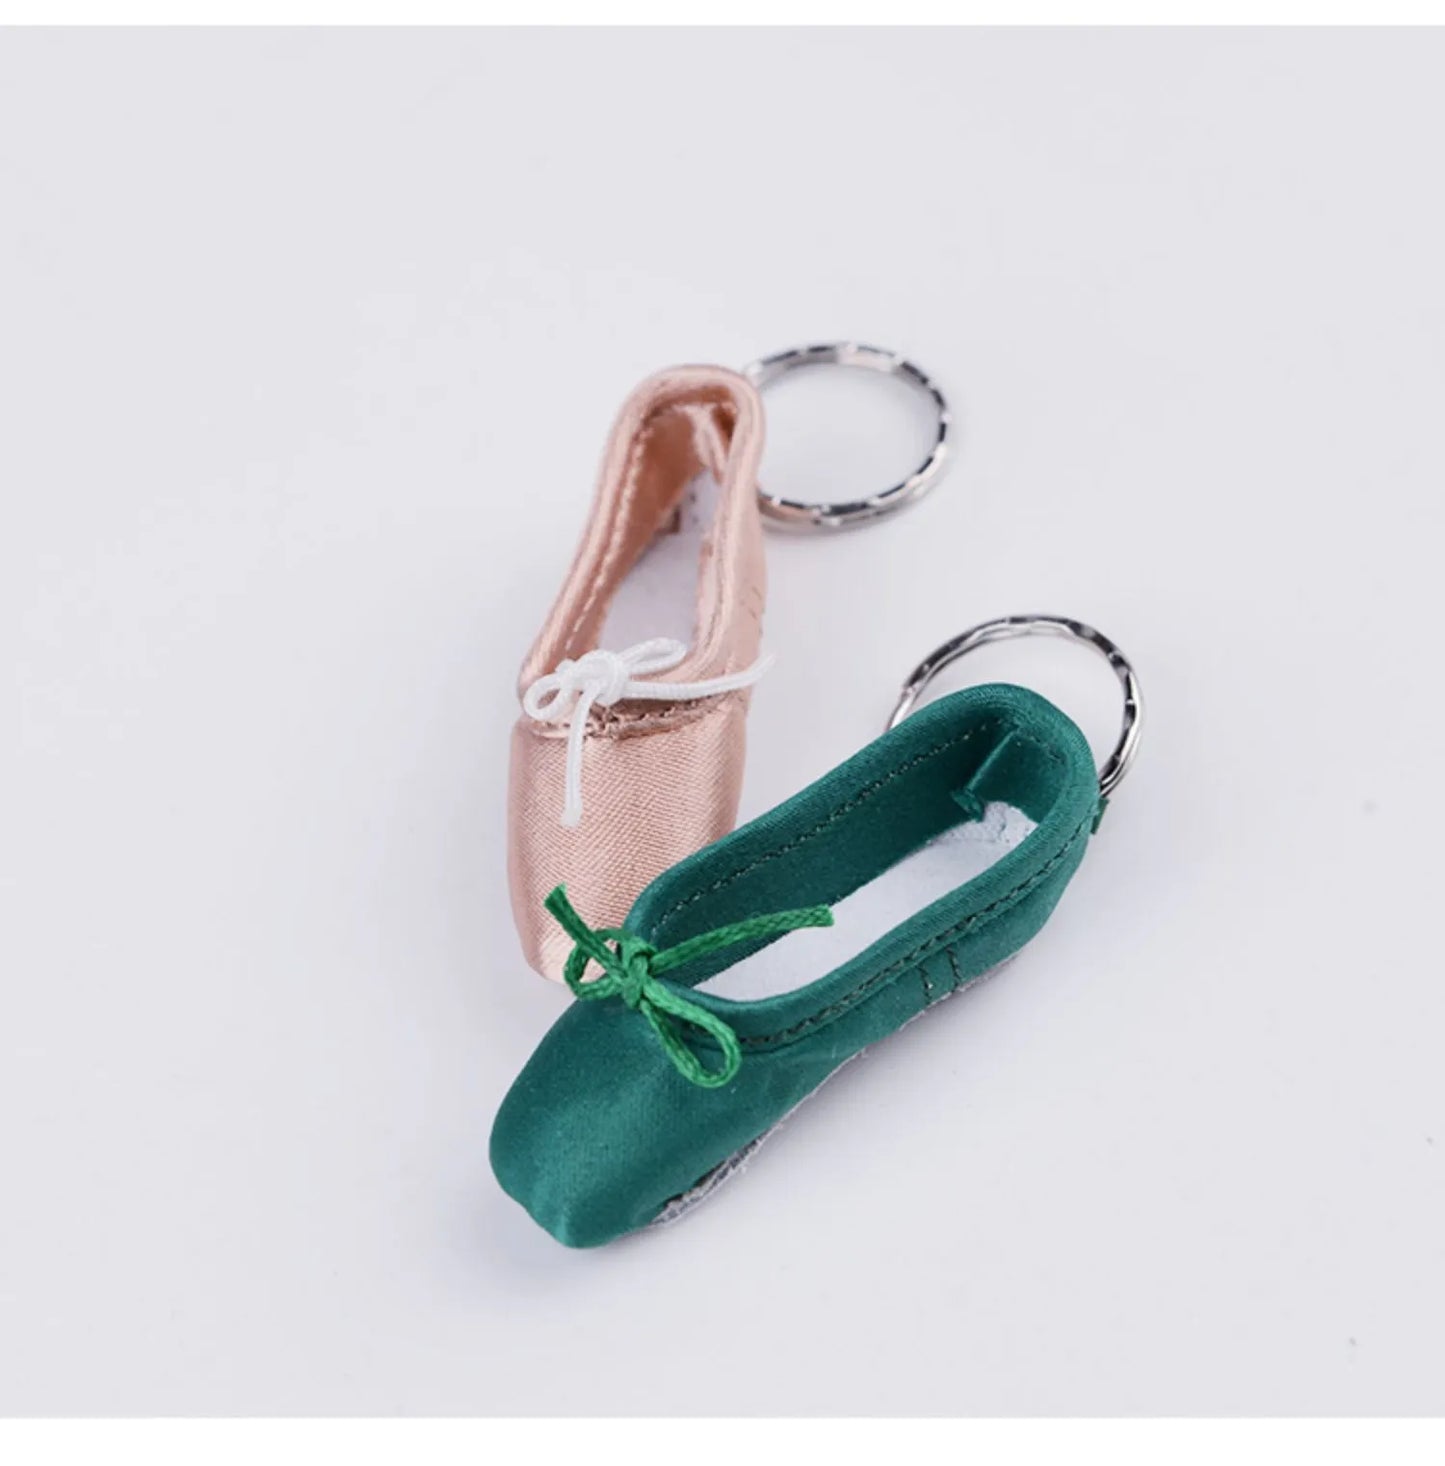 Llavero de zapato de punta satinada - Accesorios de ballet únicos - Panache Ballet Boutique